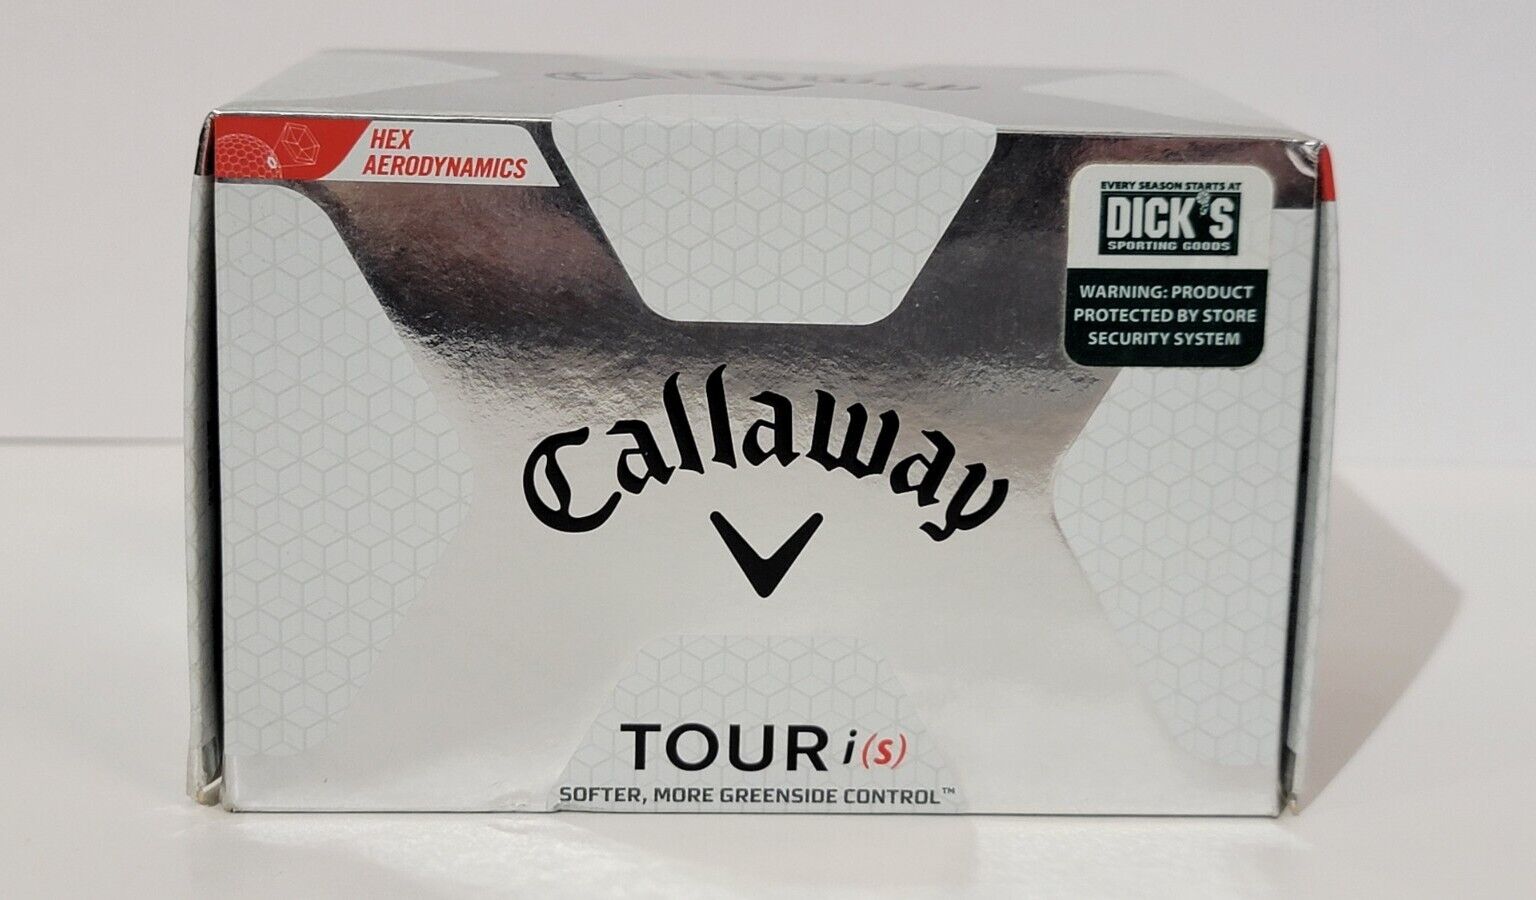 Callaway Hex Aerodynamics Tour Golf 12 Balls Tour i(S) Soft Greenside Control 